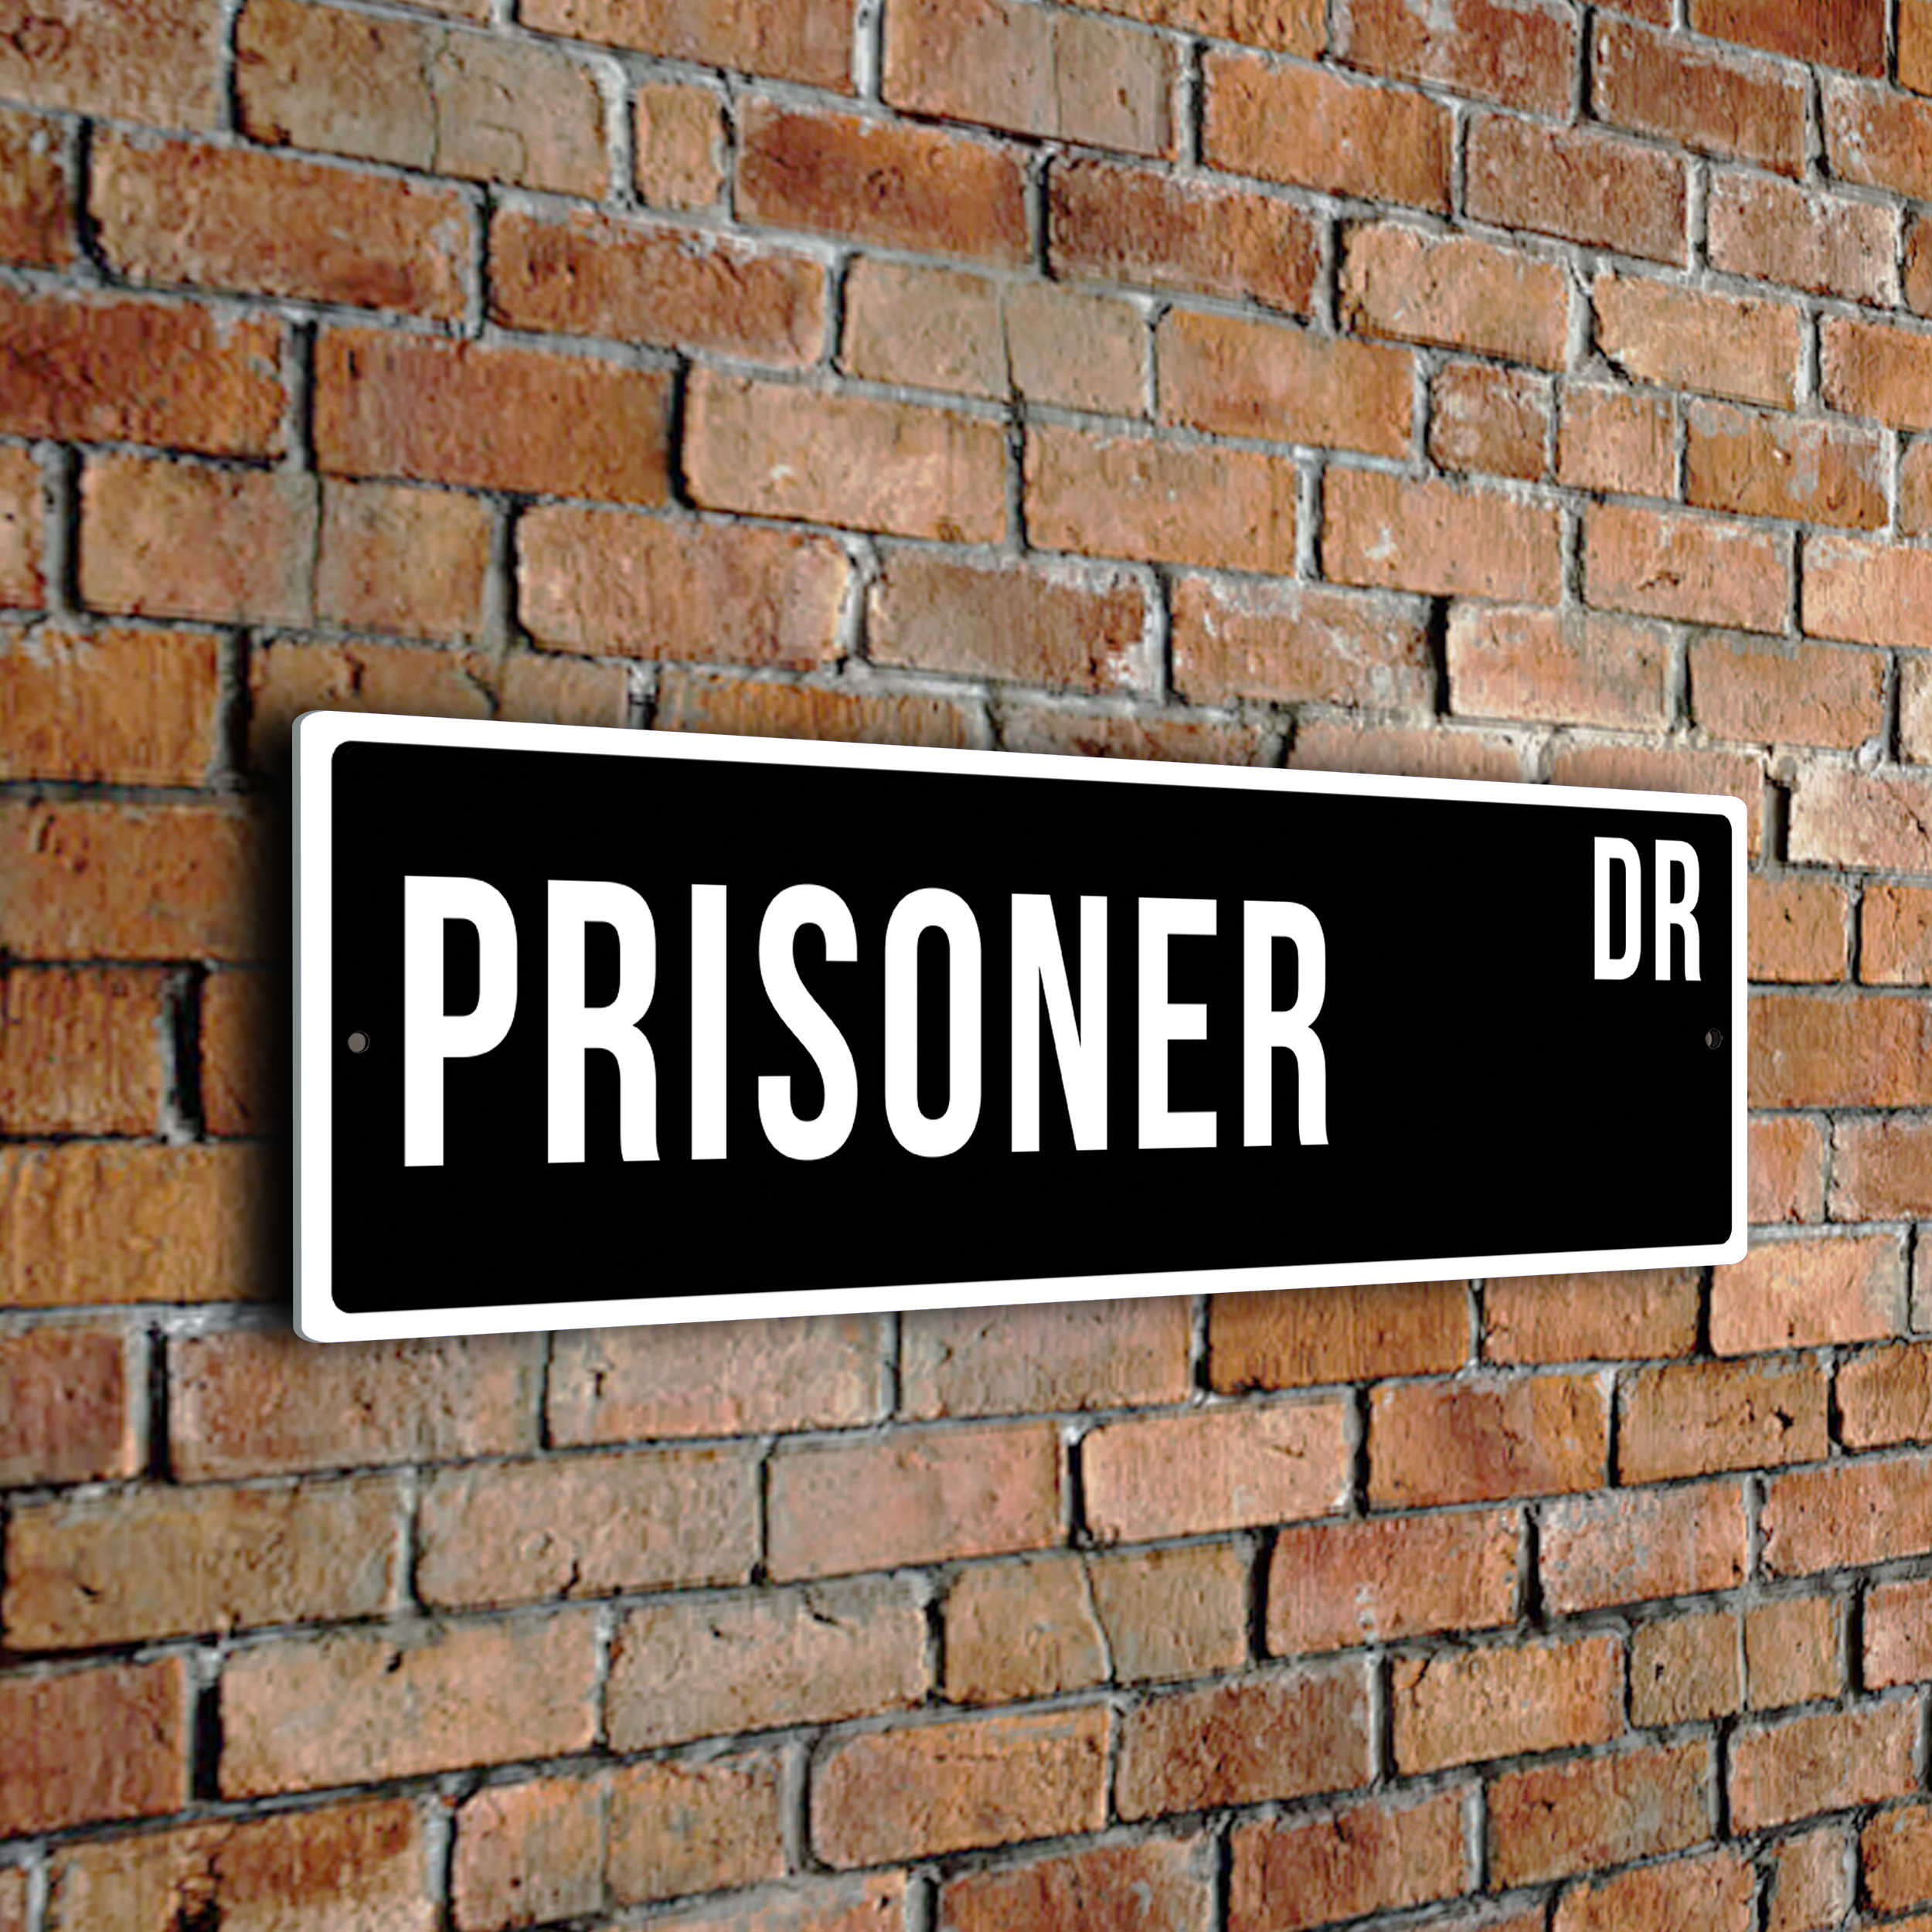 Prisoner street sign